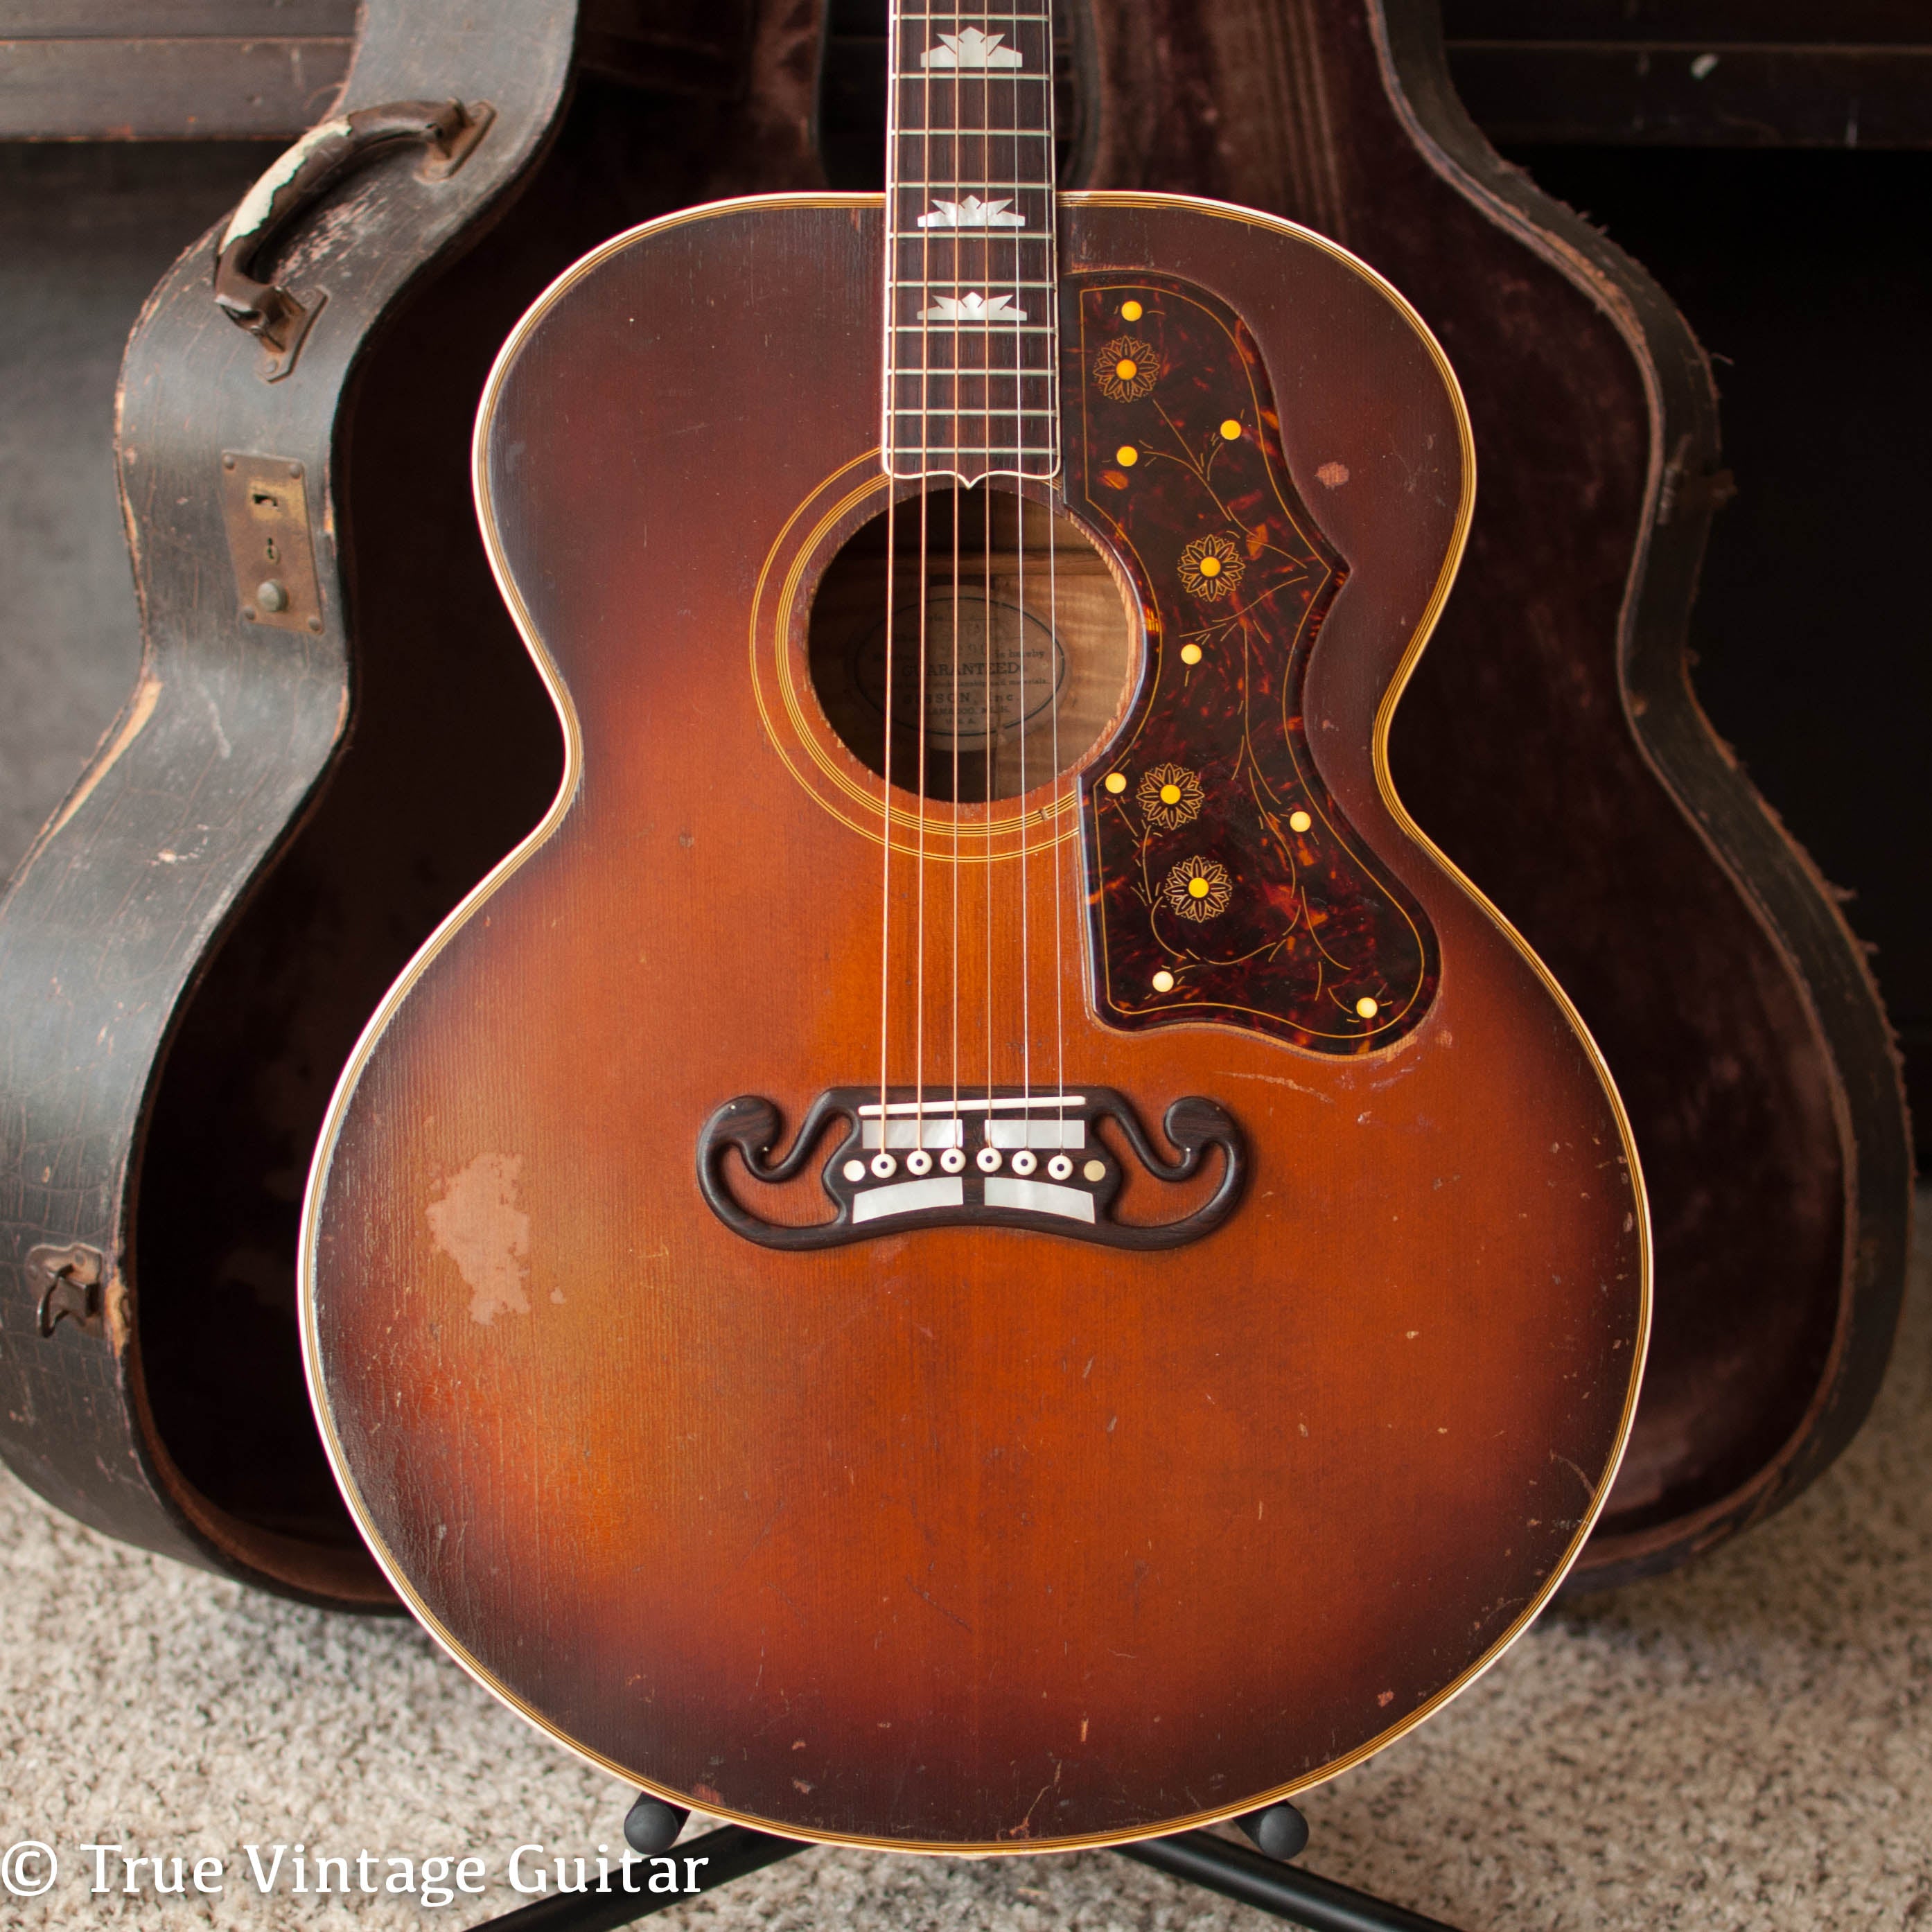 Vintage 1948 Gibson SJ-200 acoustic guitar engraved pickguard